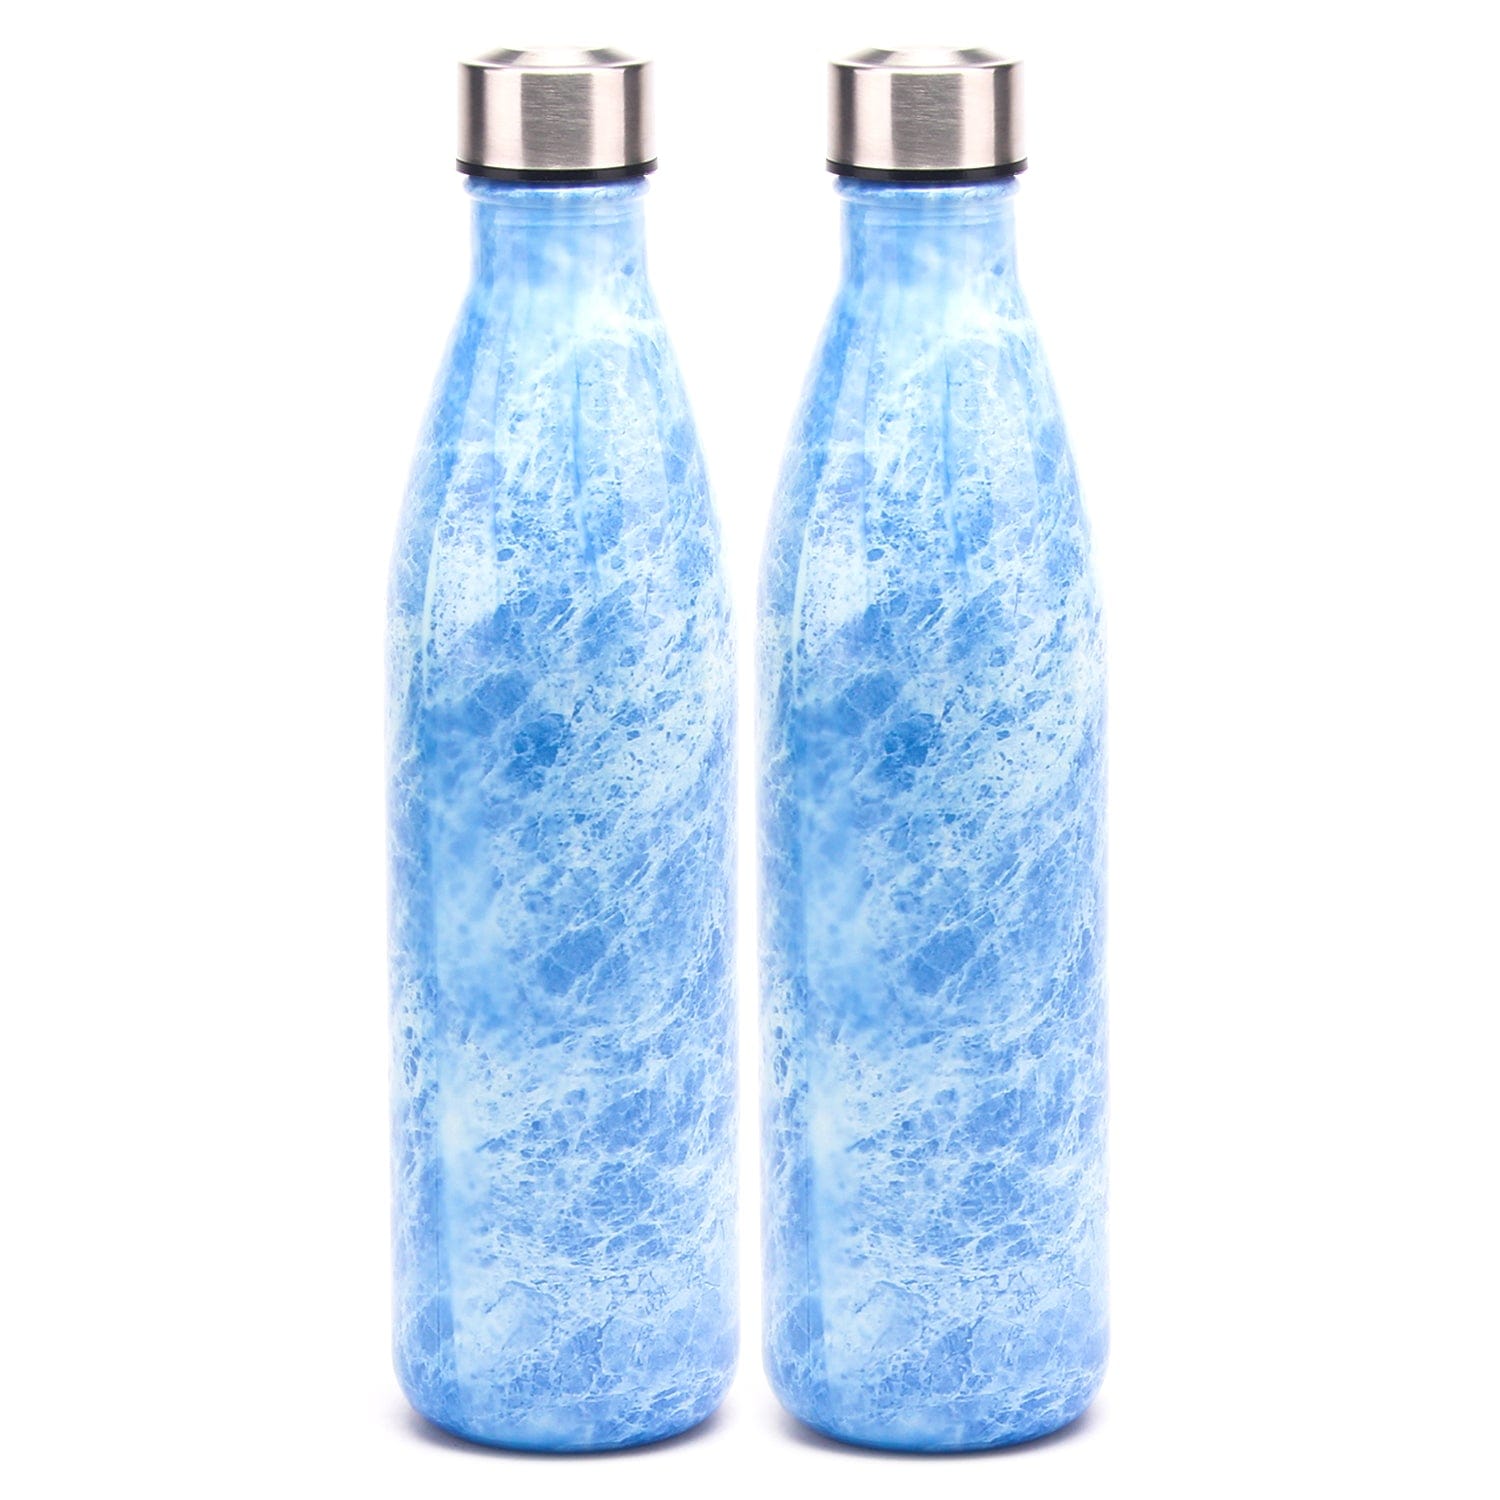 Red Butler Bottles Decorative Glass Bottle 750ml | 2pcs Set | Blue DGBF75A3 Redbutler